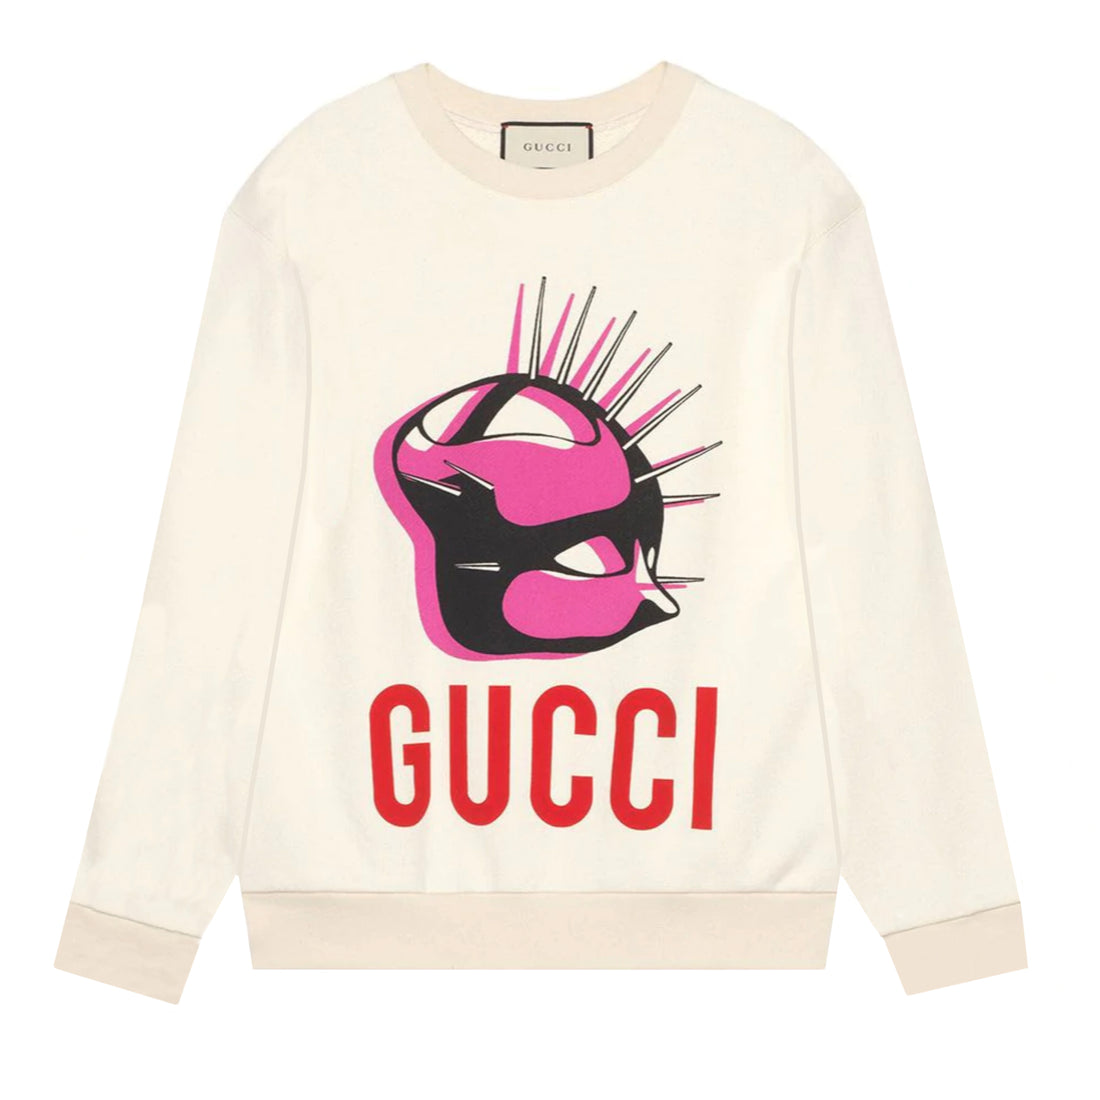 Gucci Manifesto Sweatshirt